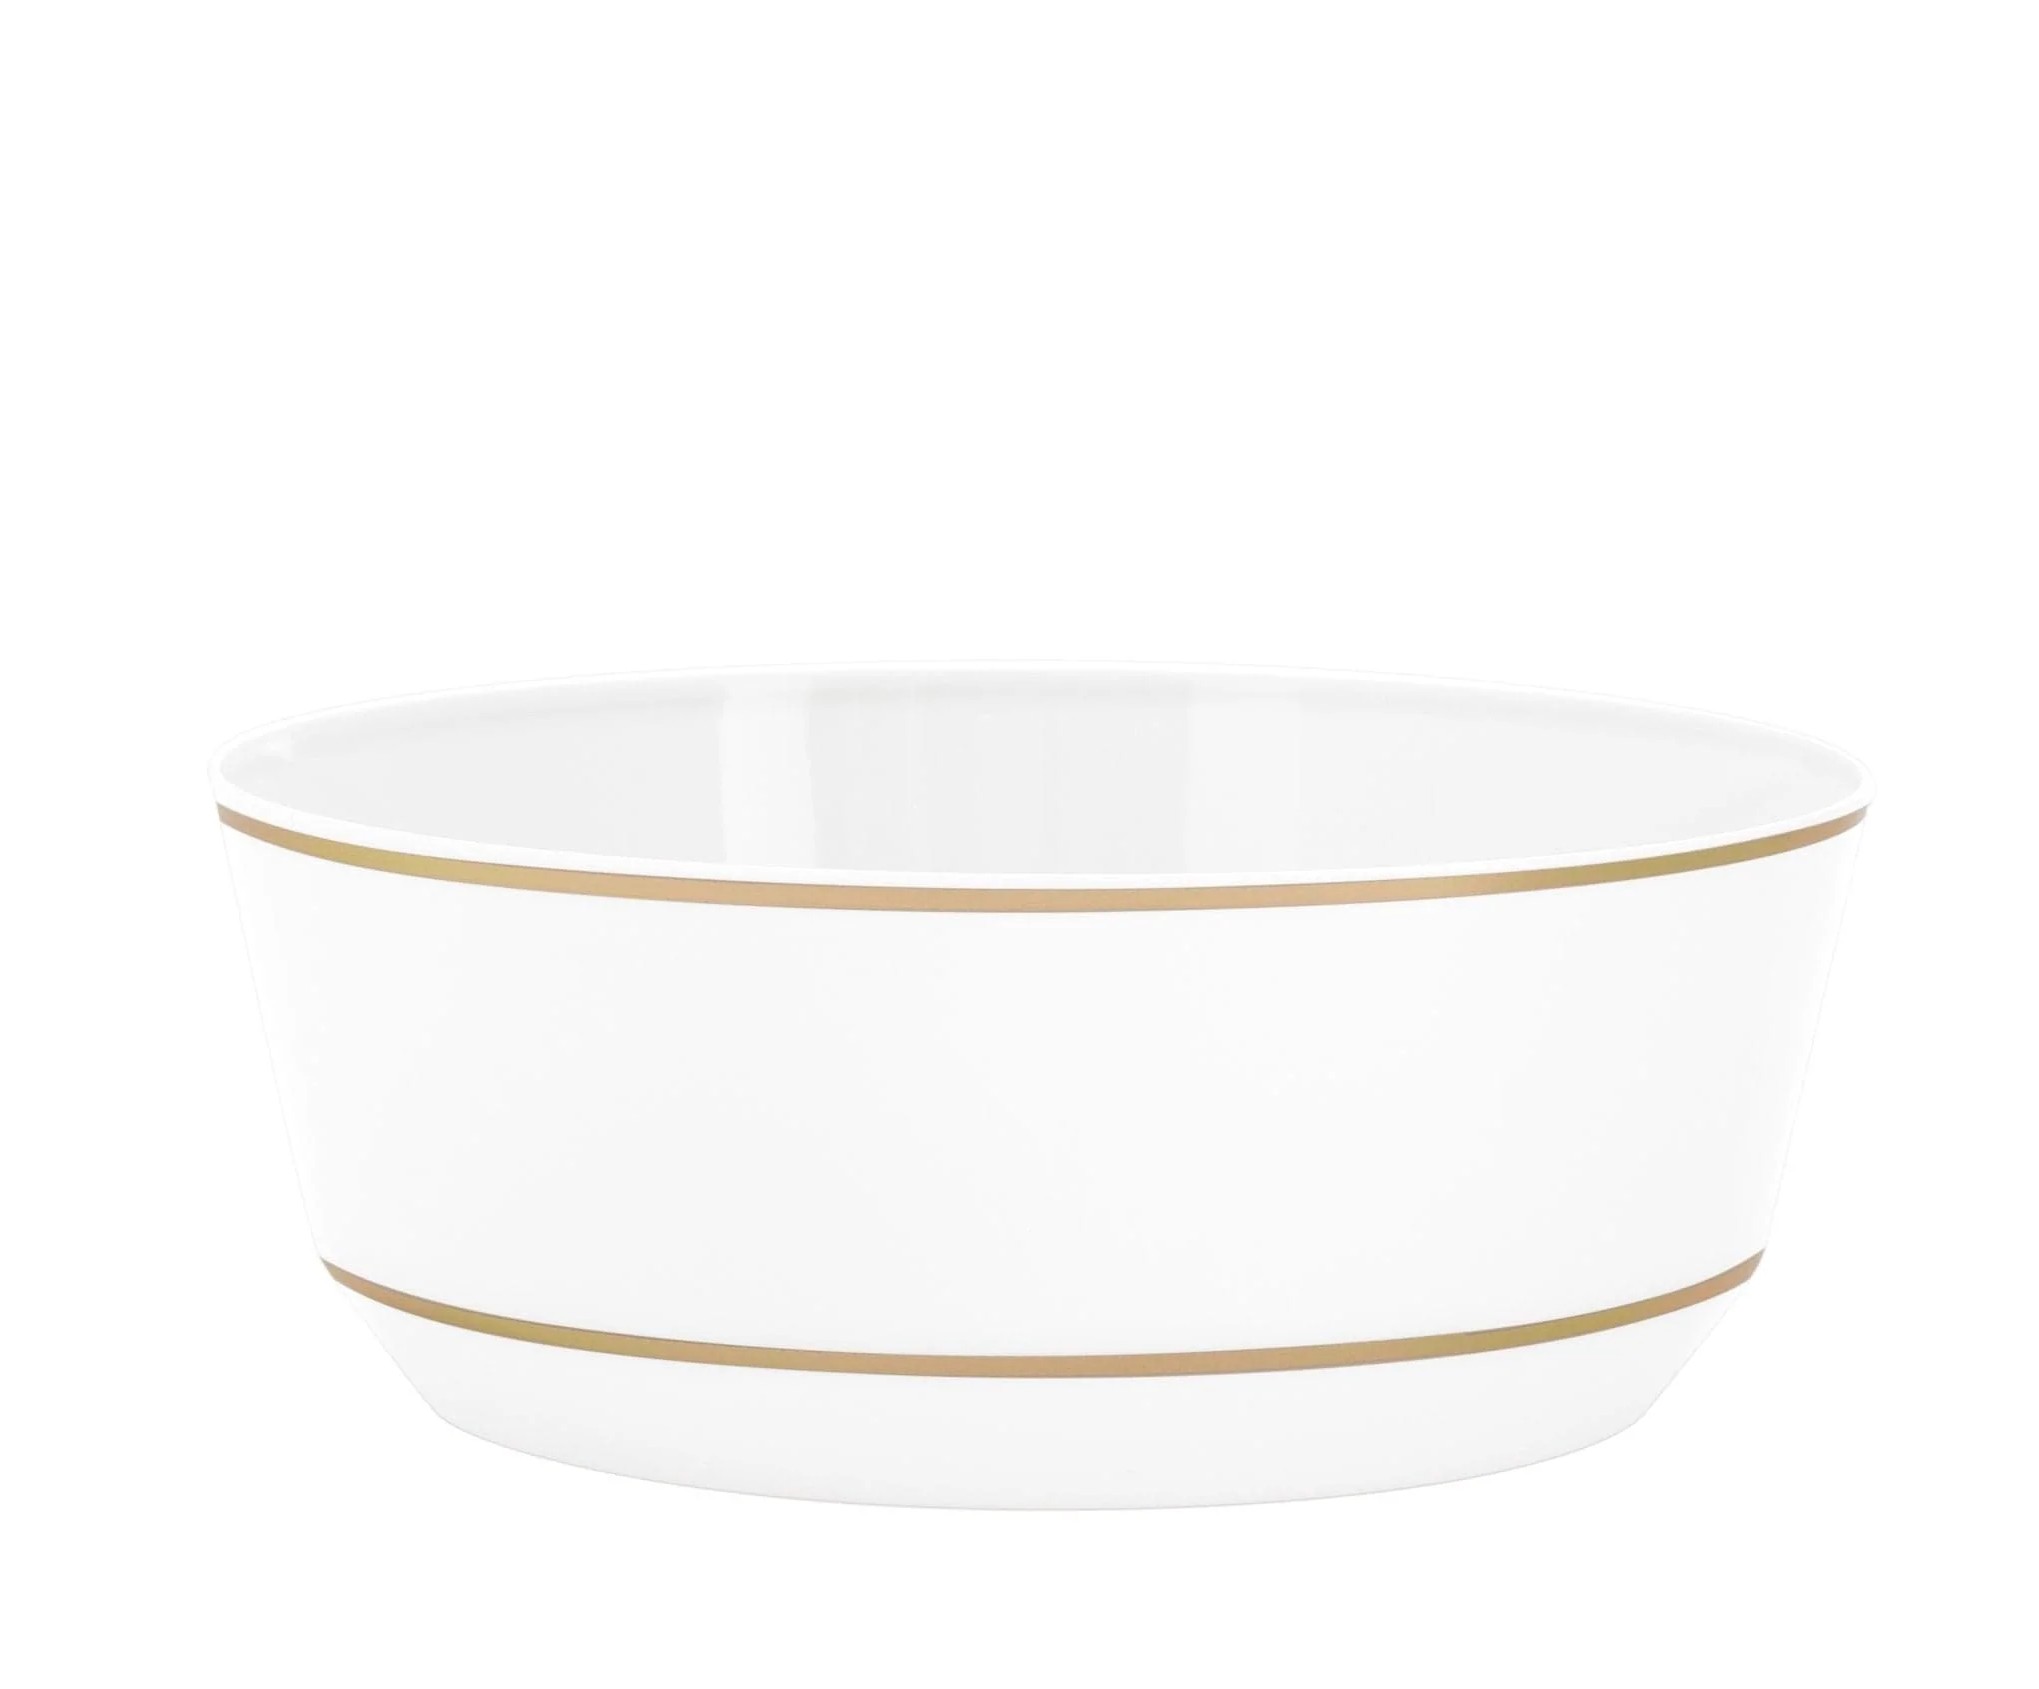 Luxe Party White Gold Rim Round Plastic Bowl 14 oz.- 10 pcs